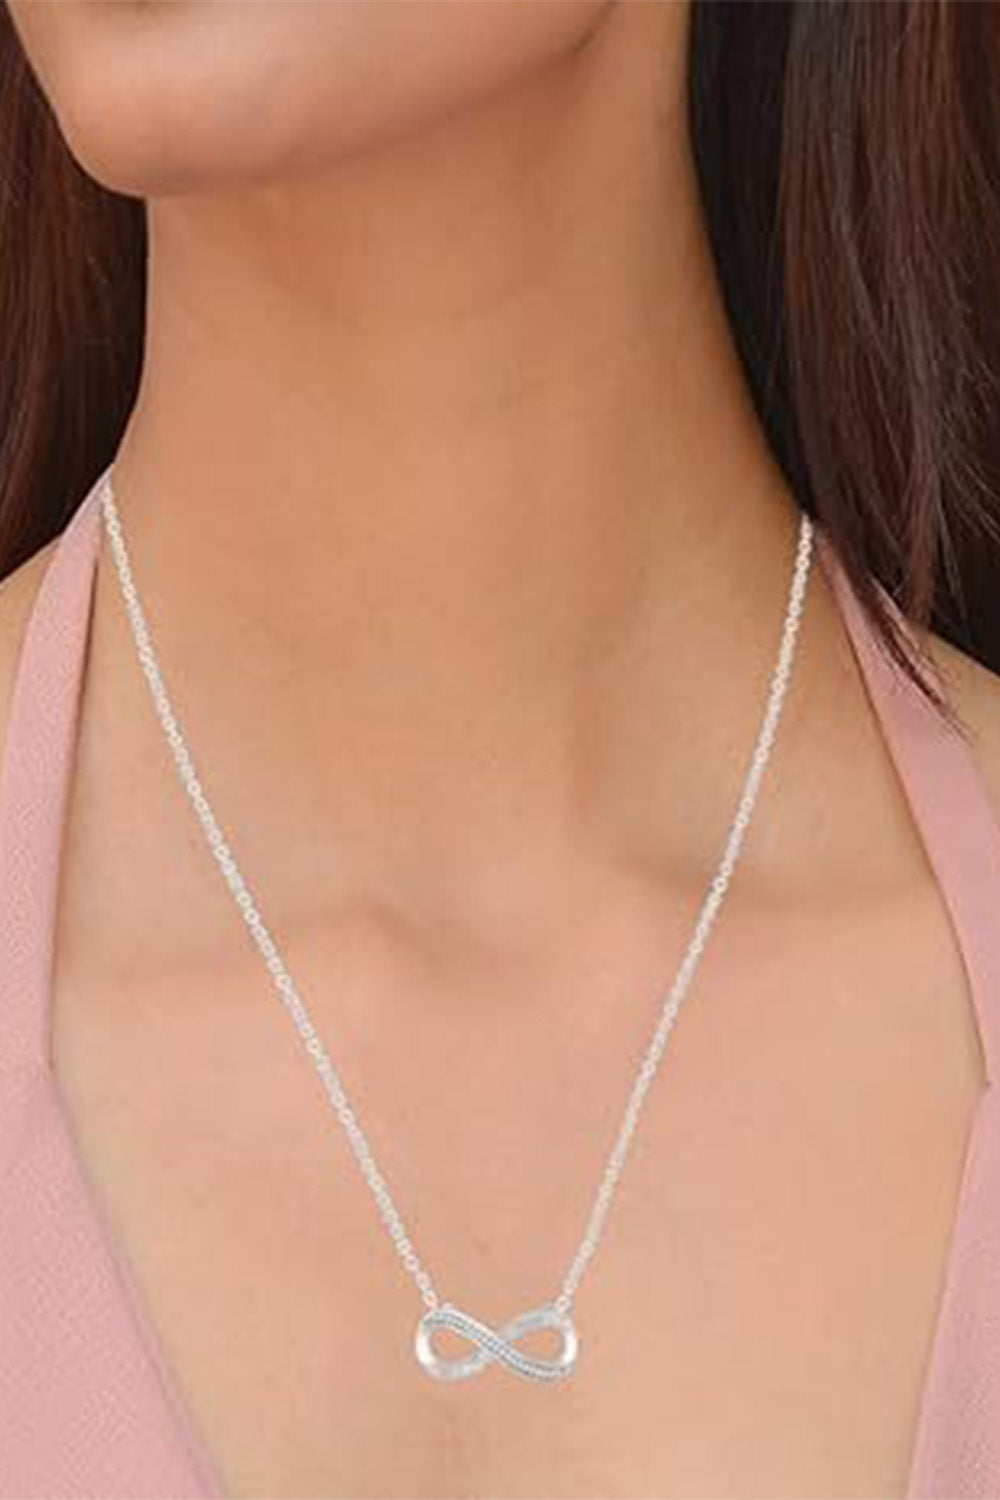 Buy 1/4 Carat Sideways Infinity Pendant Necklace